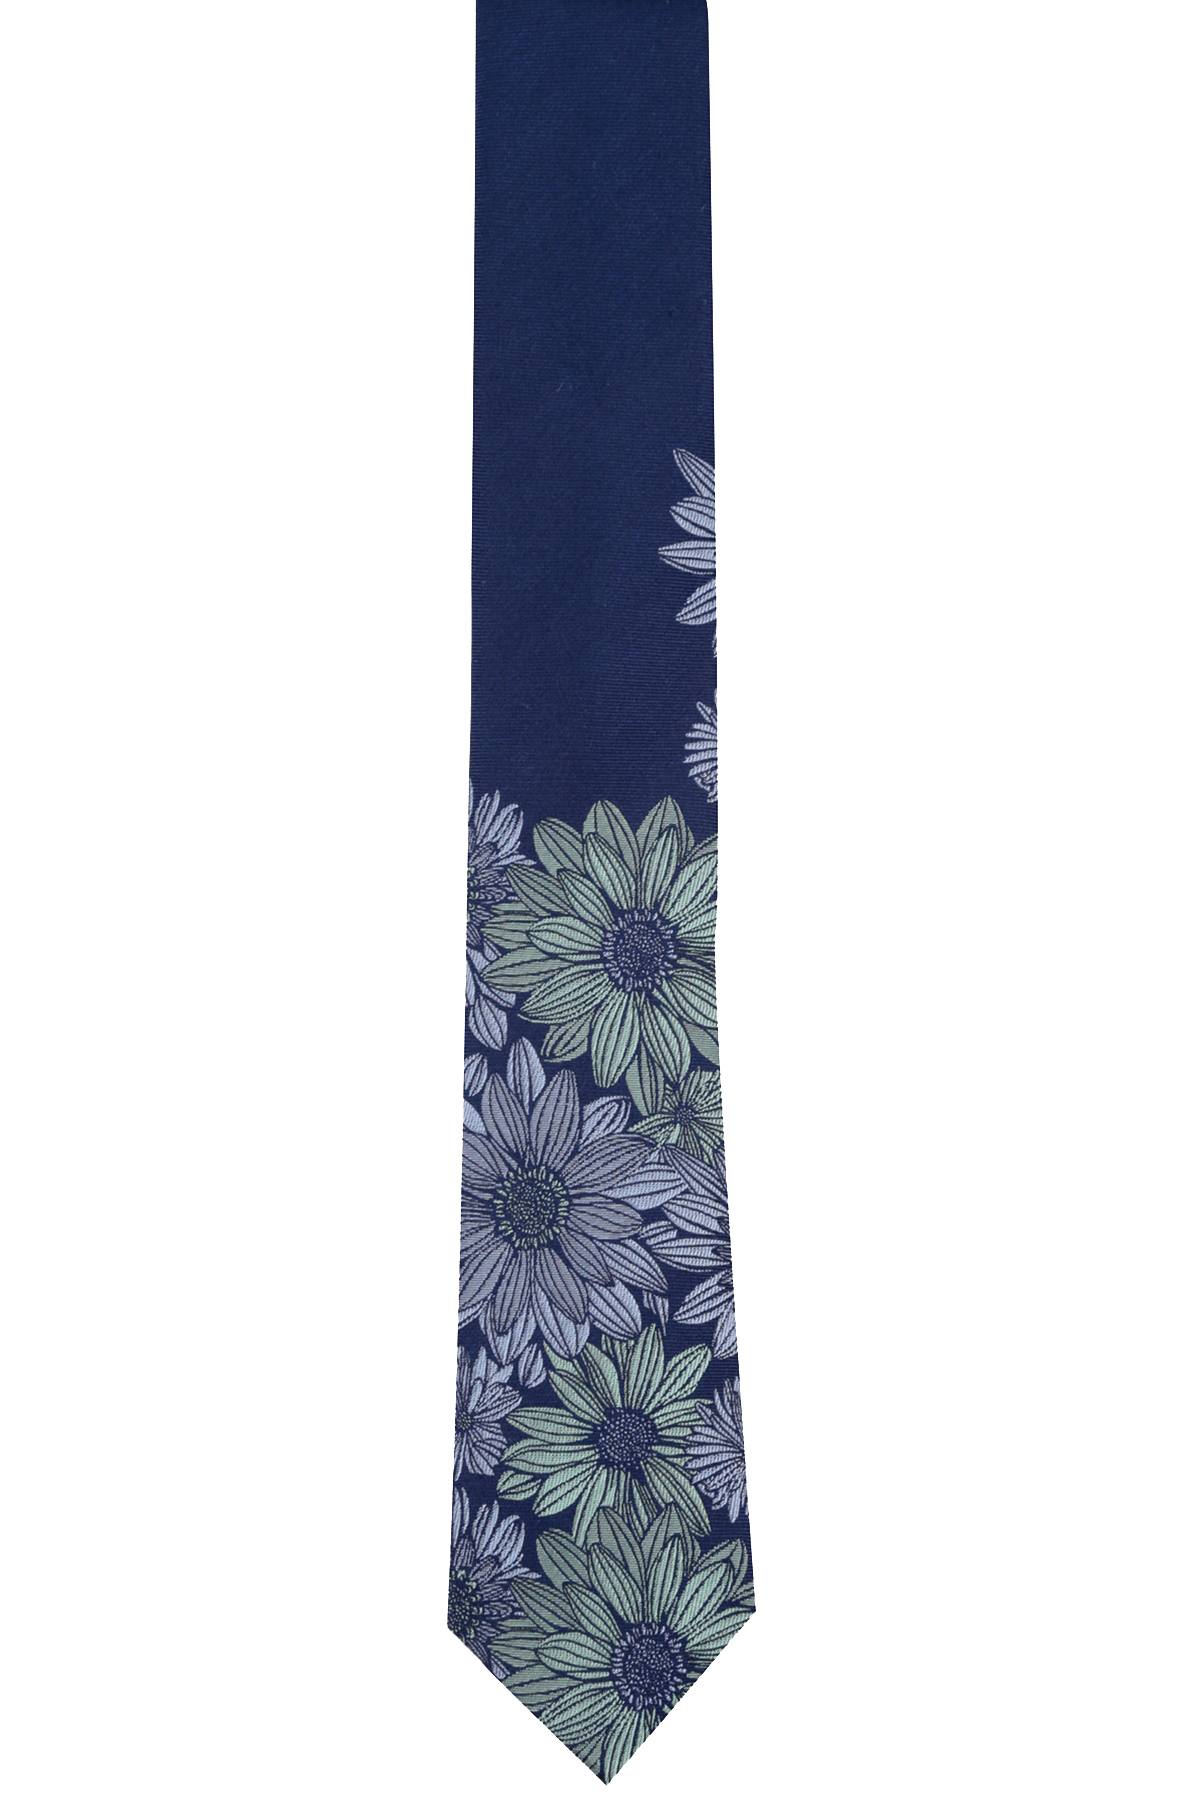 BAR III Mint Amer Floral Skinny Tie